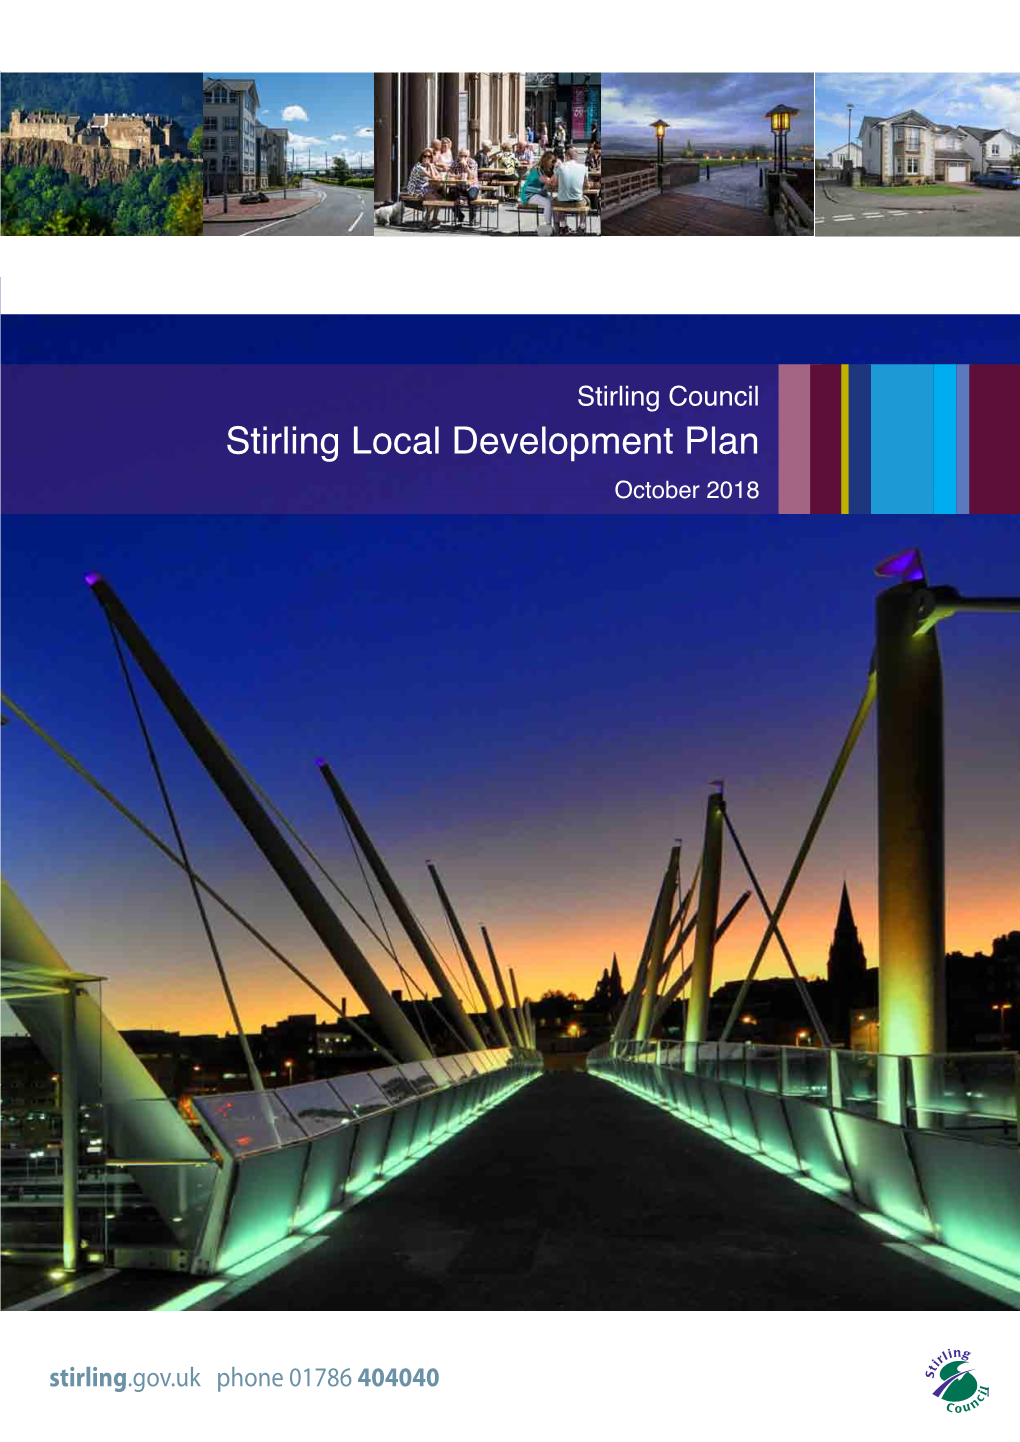 Stirling Local Development Plan 2018